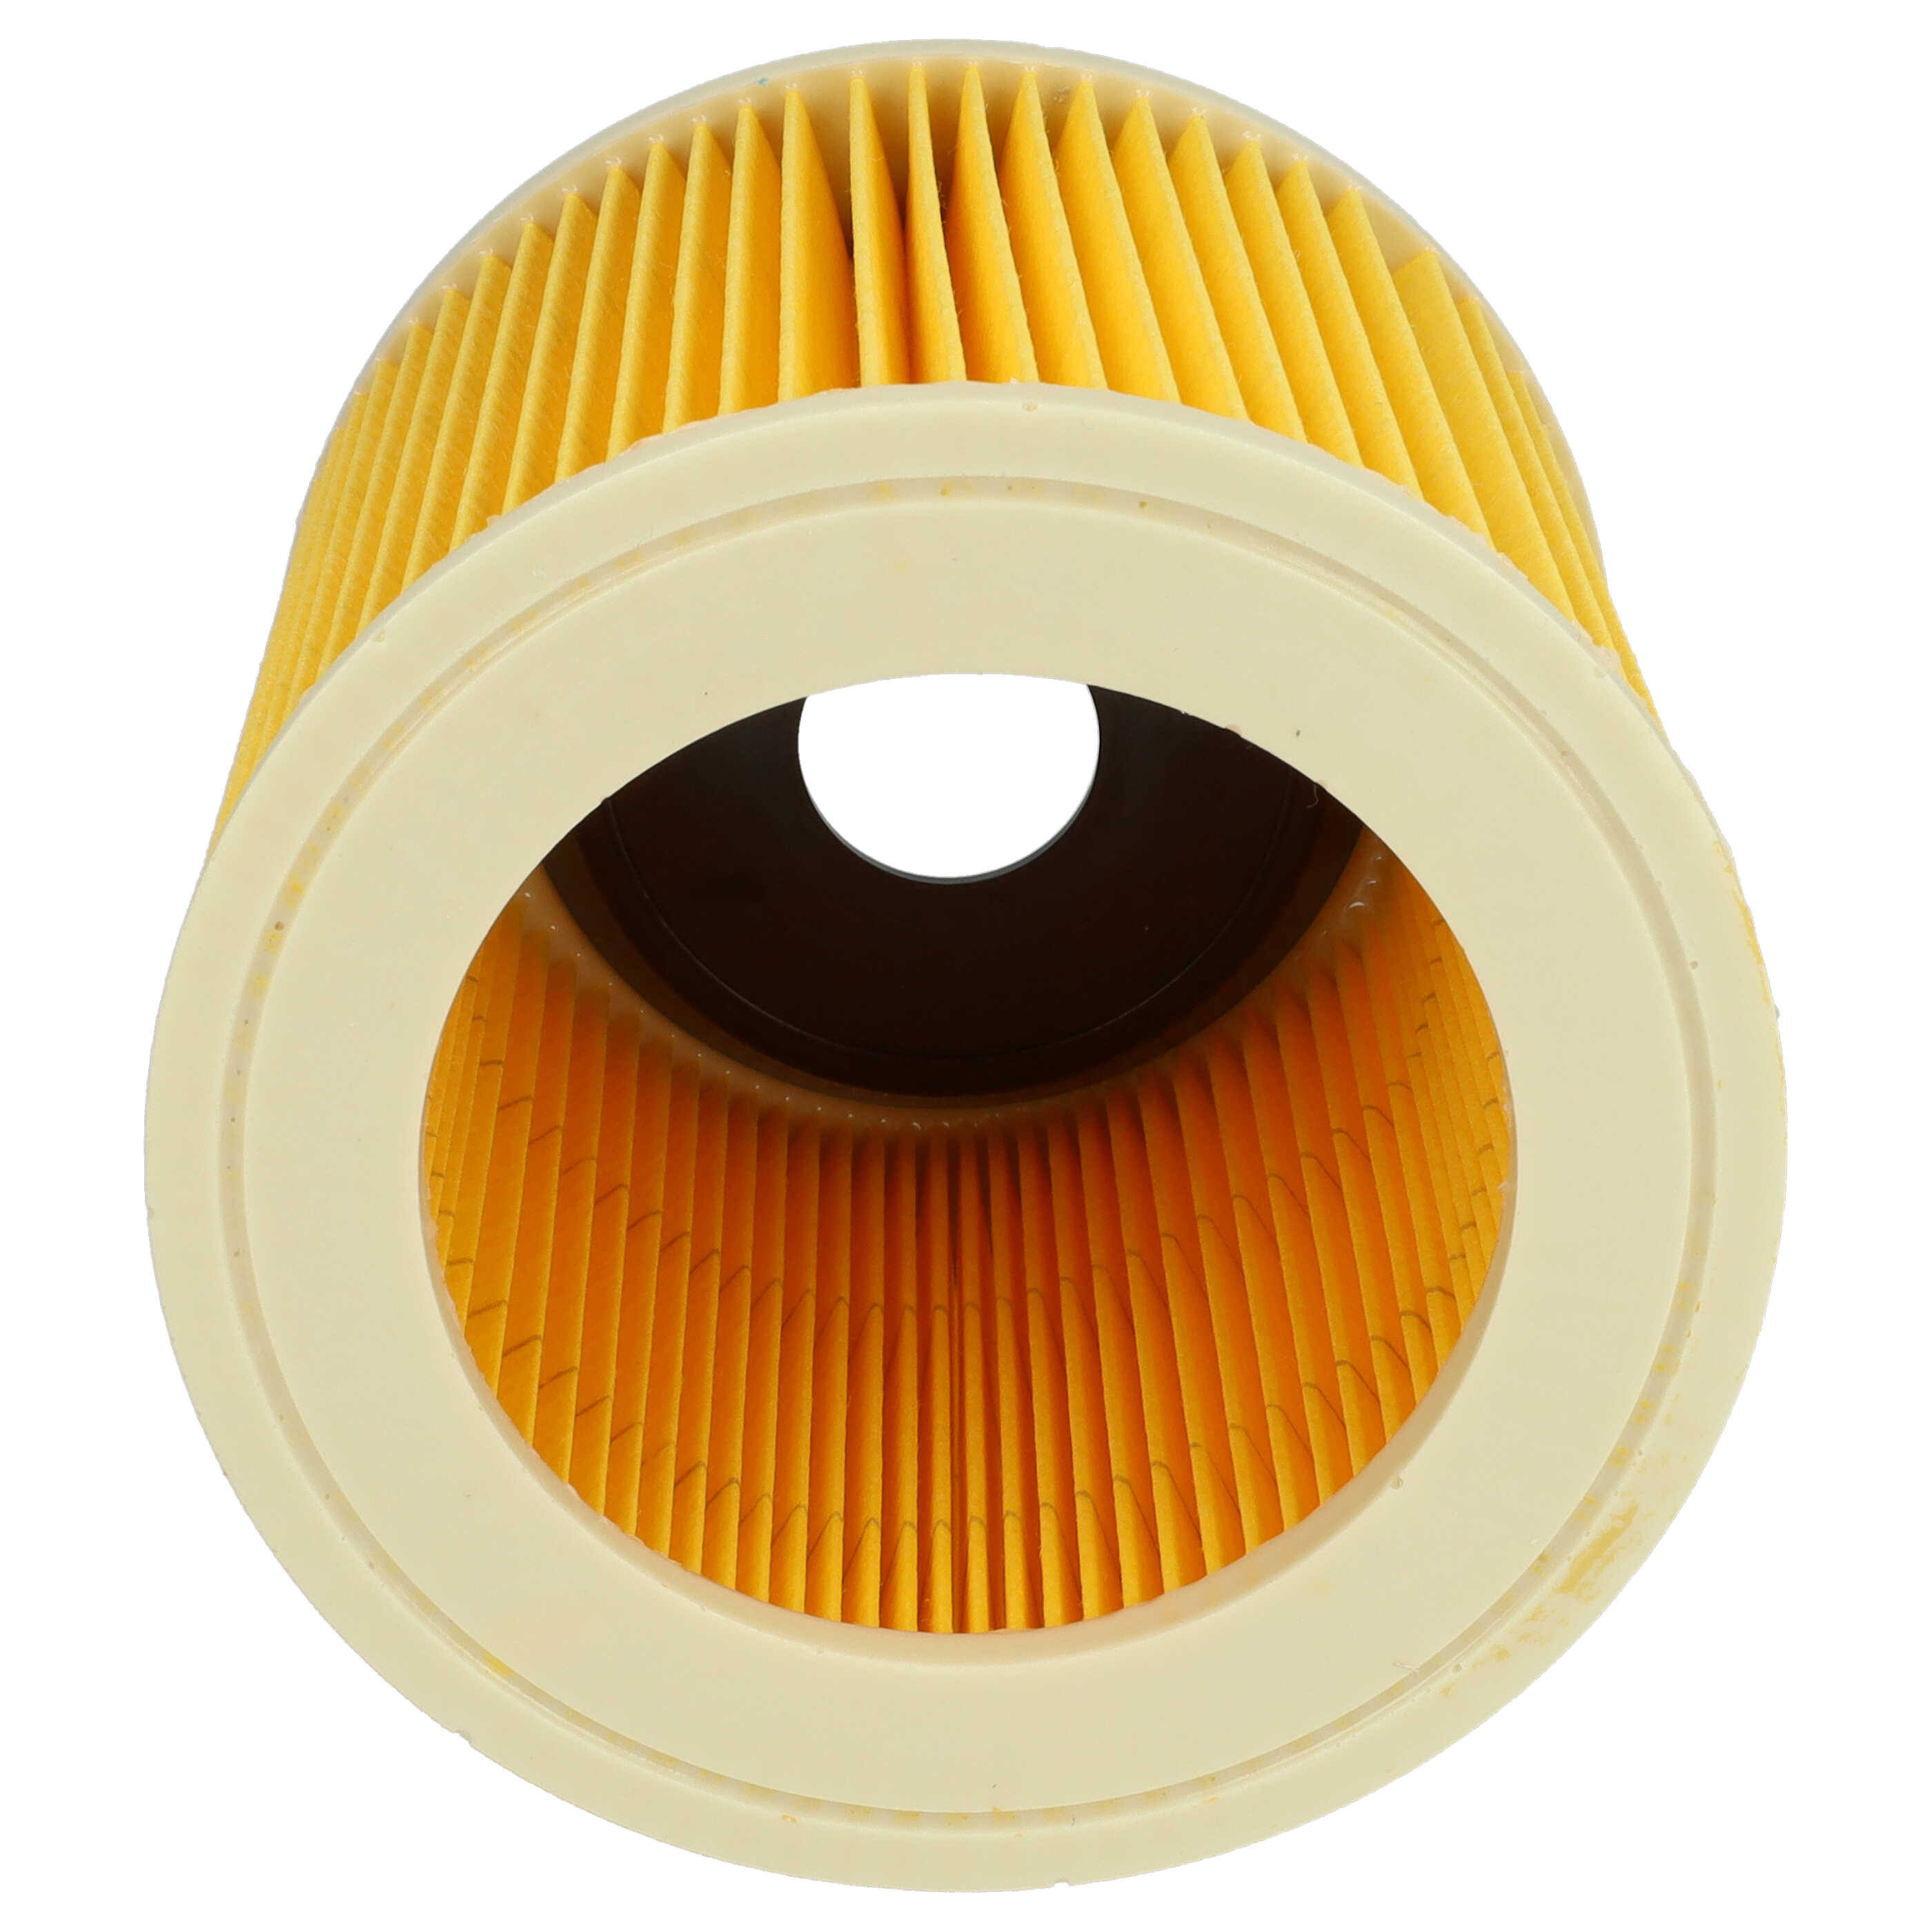 2x cartridge filter replaces Kärcher 6.414-552.0, 6.414-547.0, 2.863-303.0 for PowerPlusVacuum Cleaner, yellow